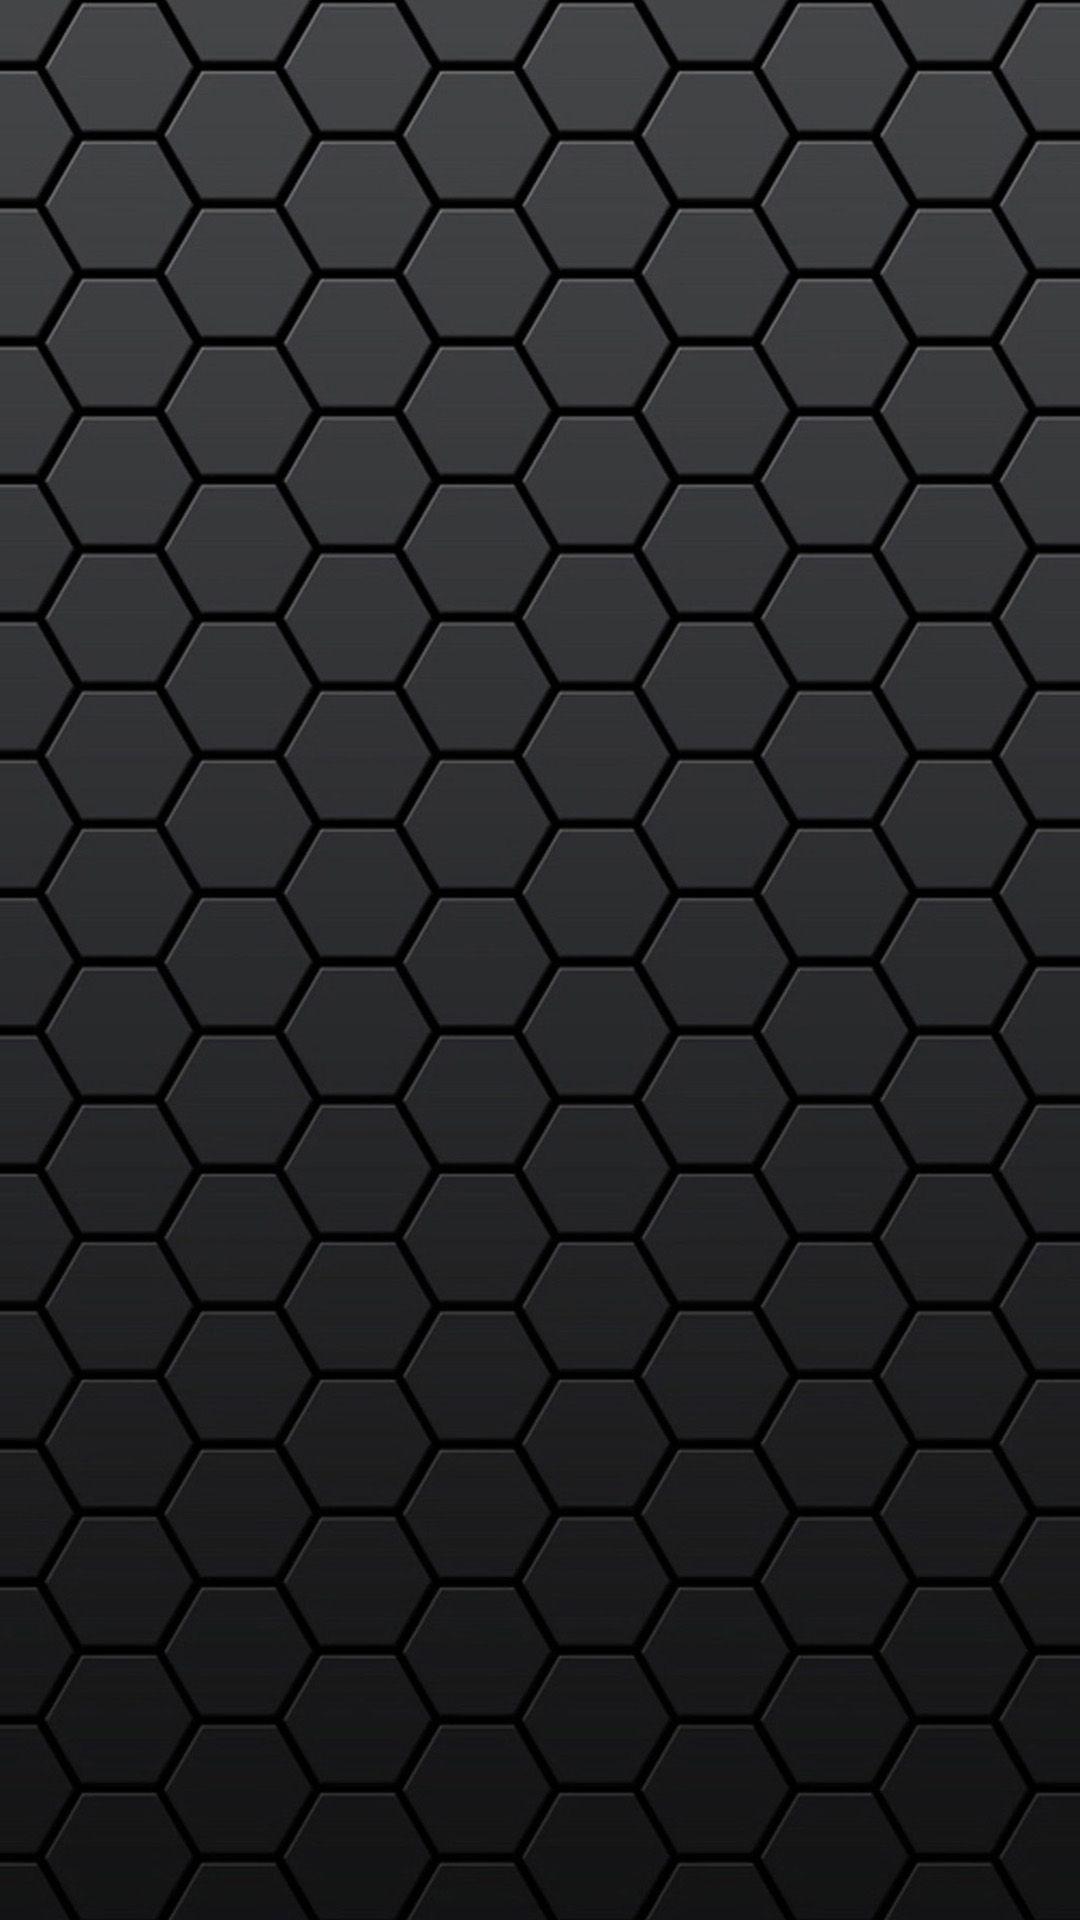 Wallpaper.wiki Carbon Fiber IPhone Wallpaper Widescreen PIC